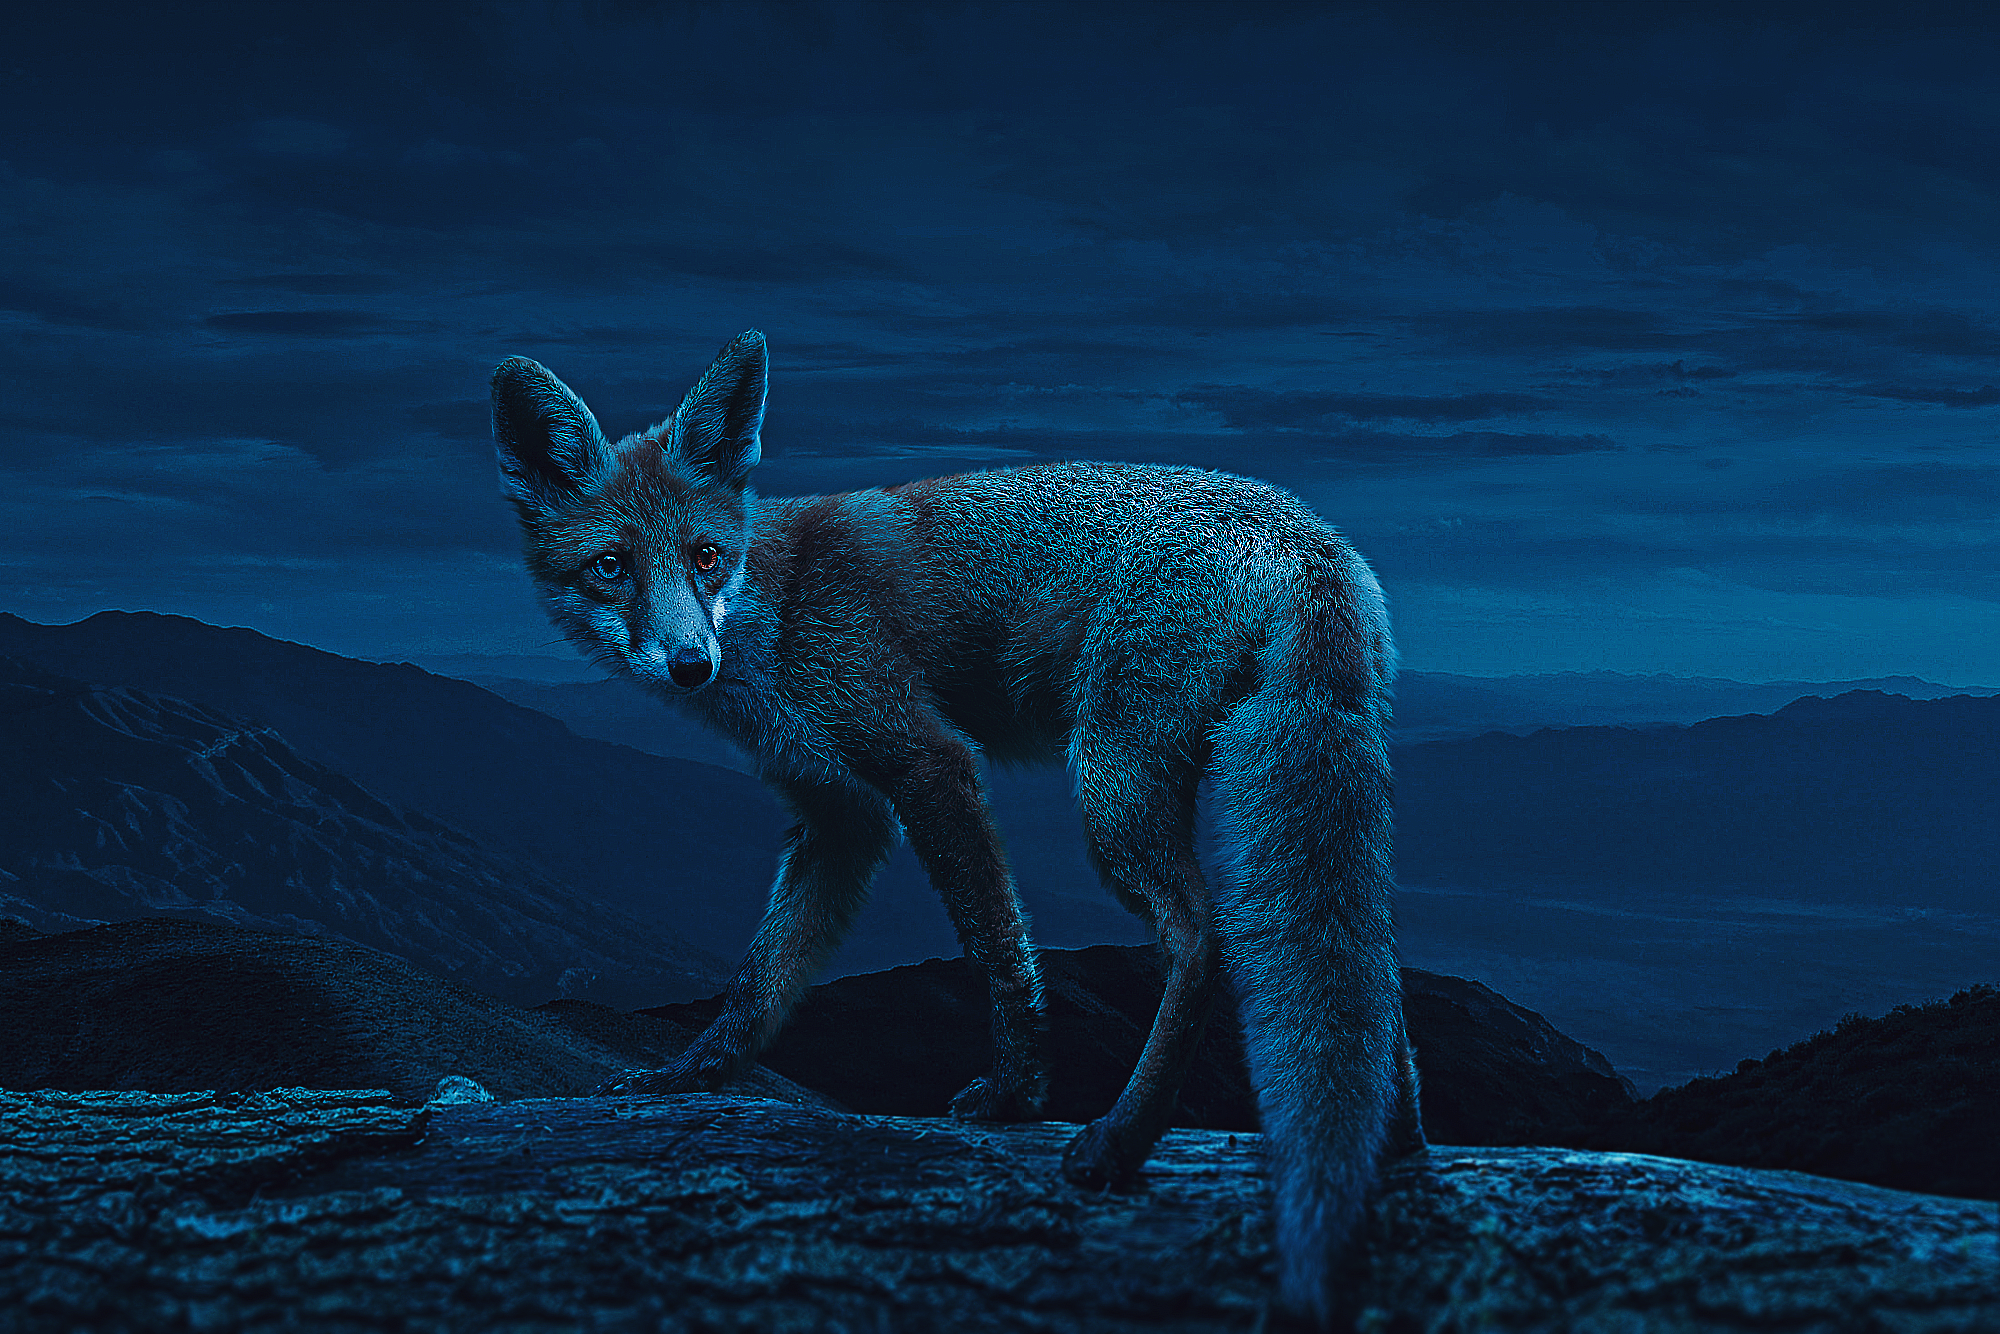 General 2000x1334 fox animals night photoshopped nature low light digital art